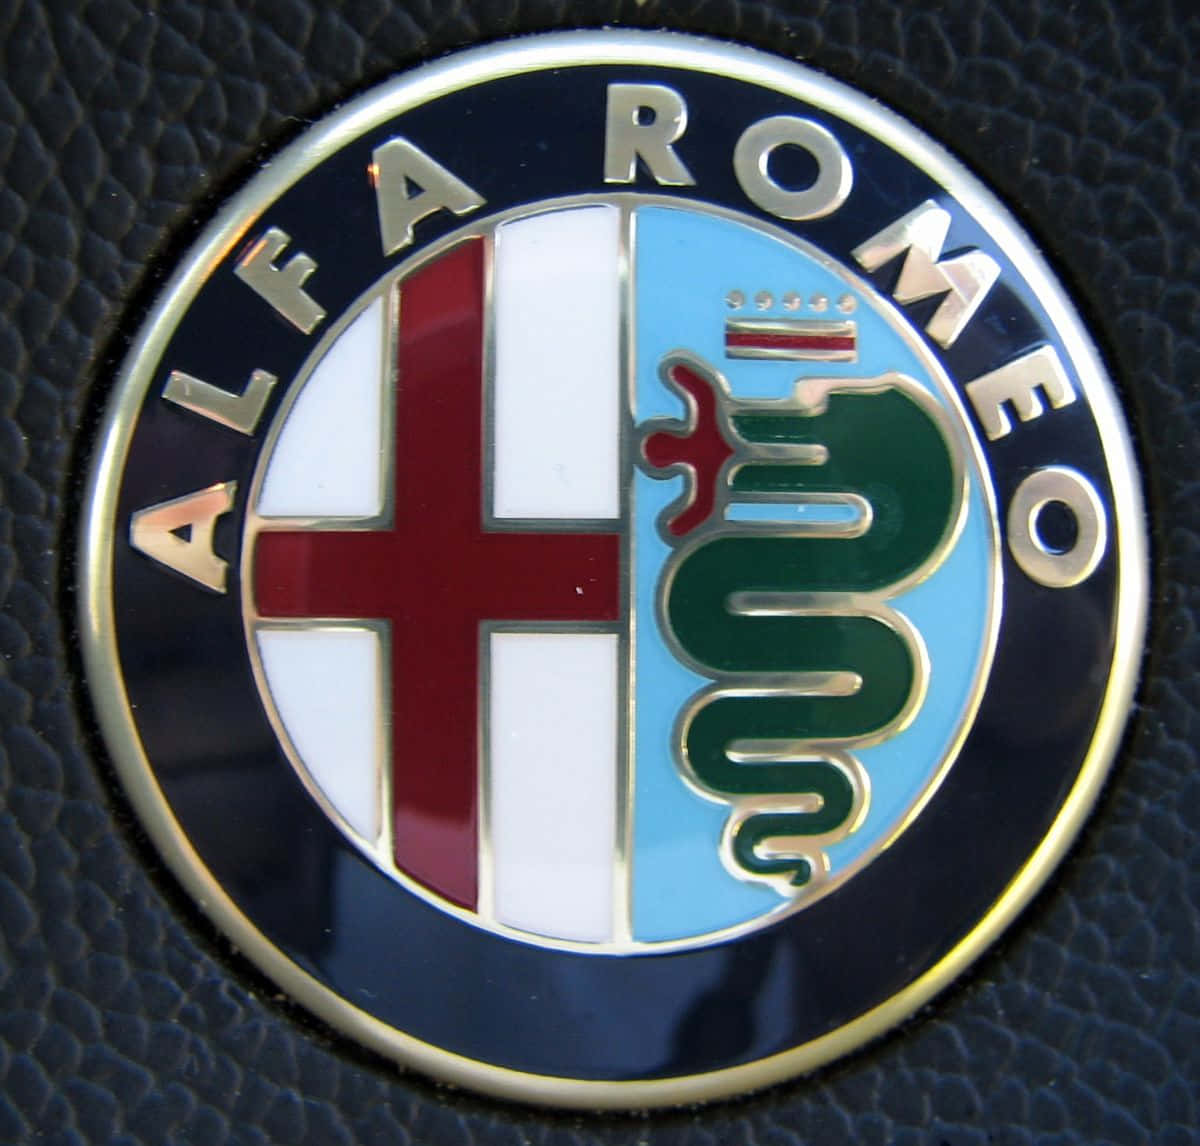 Breathtaking Italian Design with the Alfa Romeo